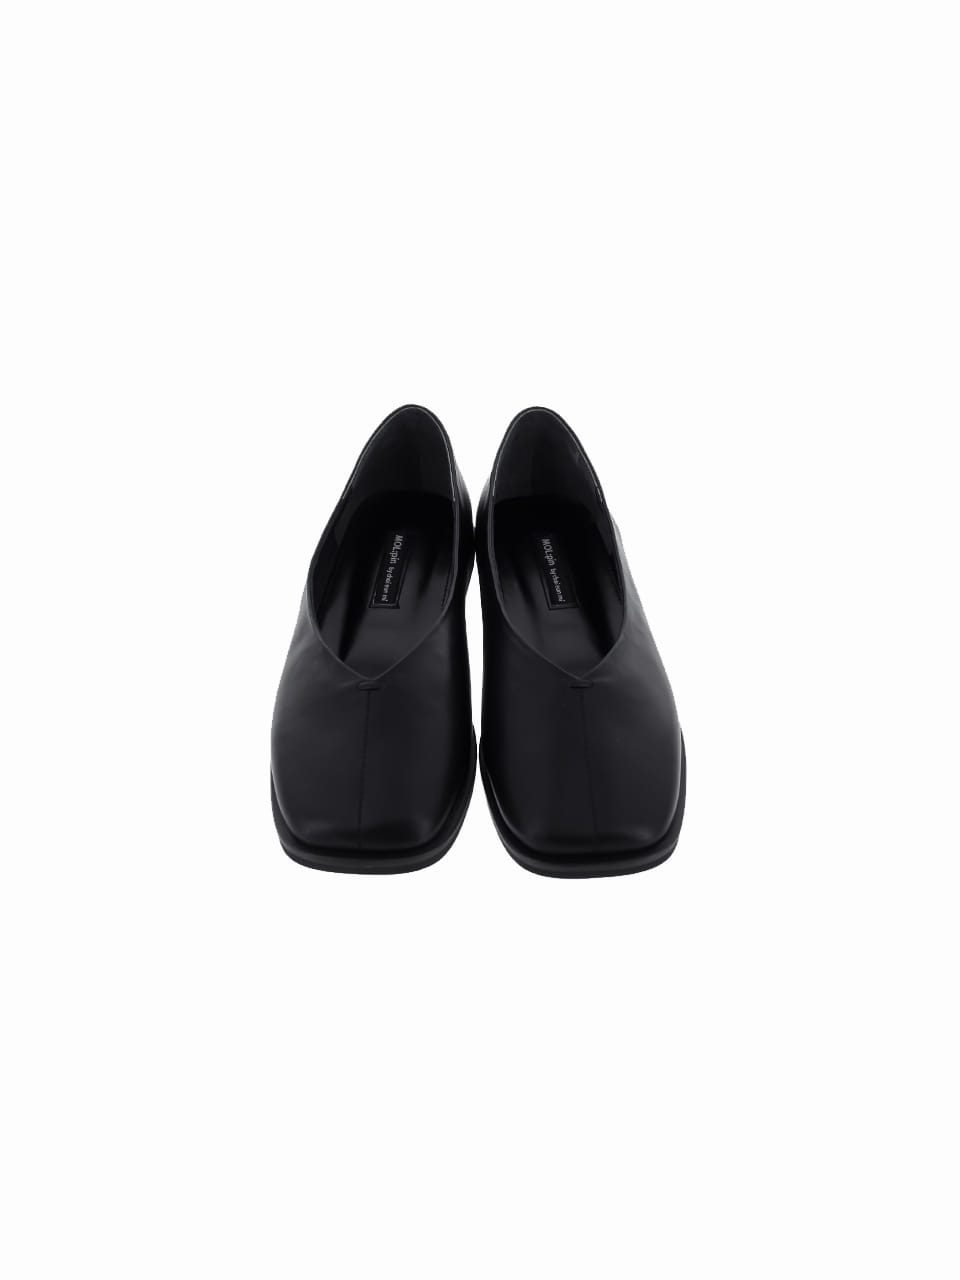 QS flat shoes_black